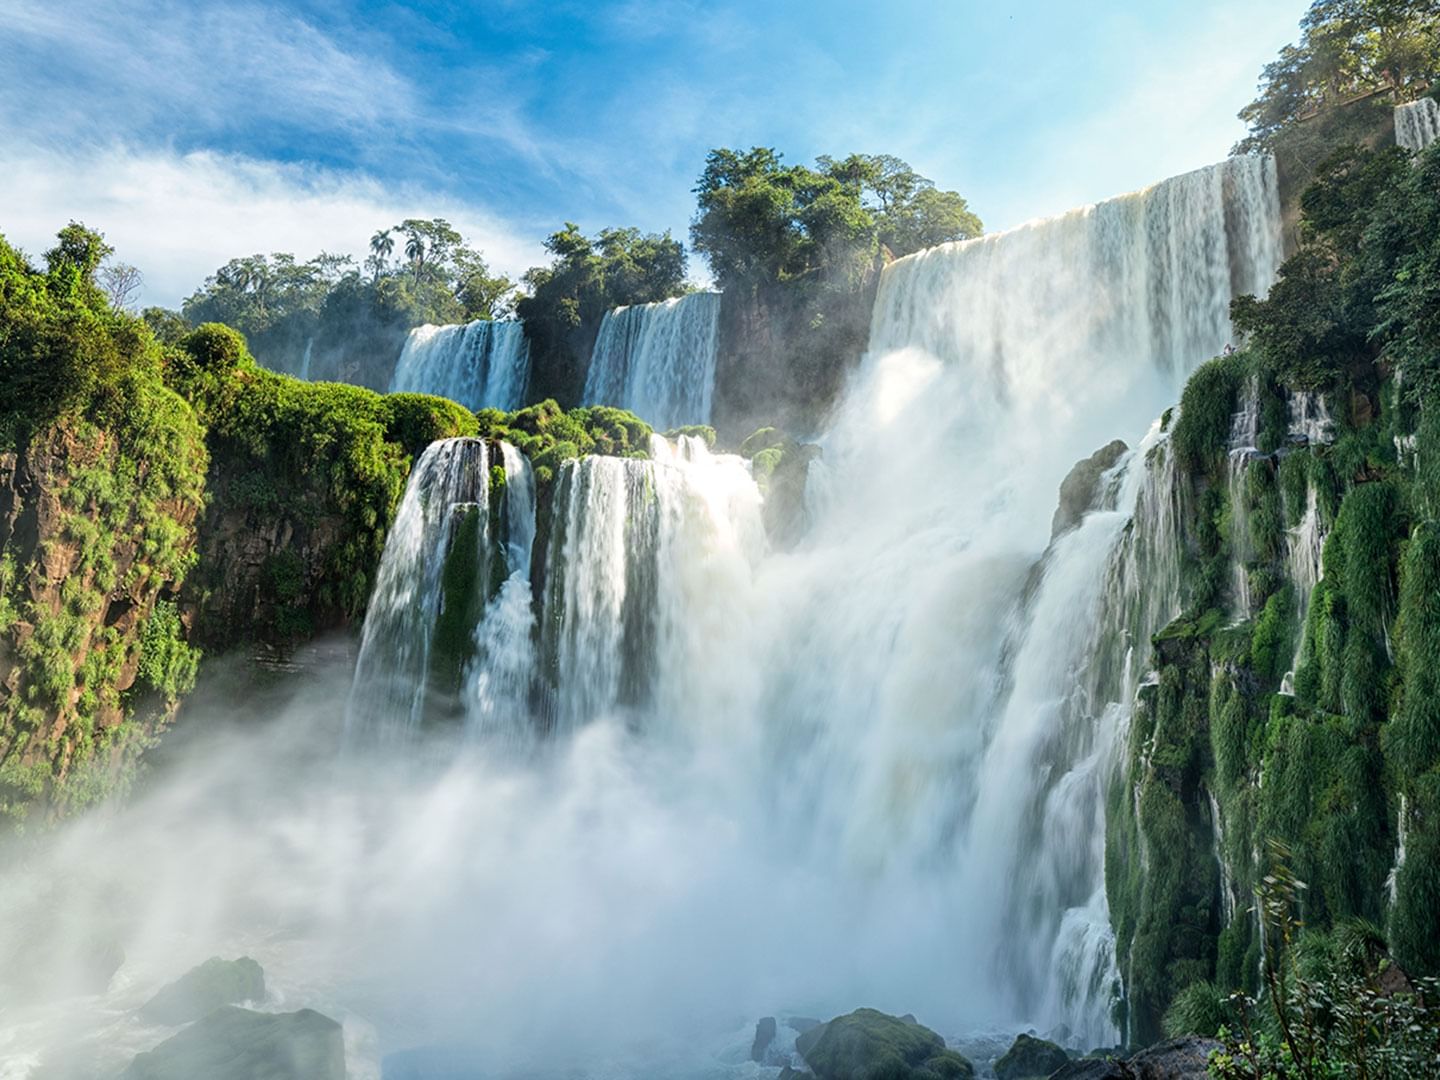 Iguazu falls 7 wonder of the world in Argentina near DOT Hotels